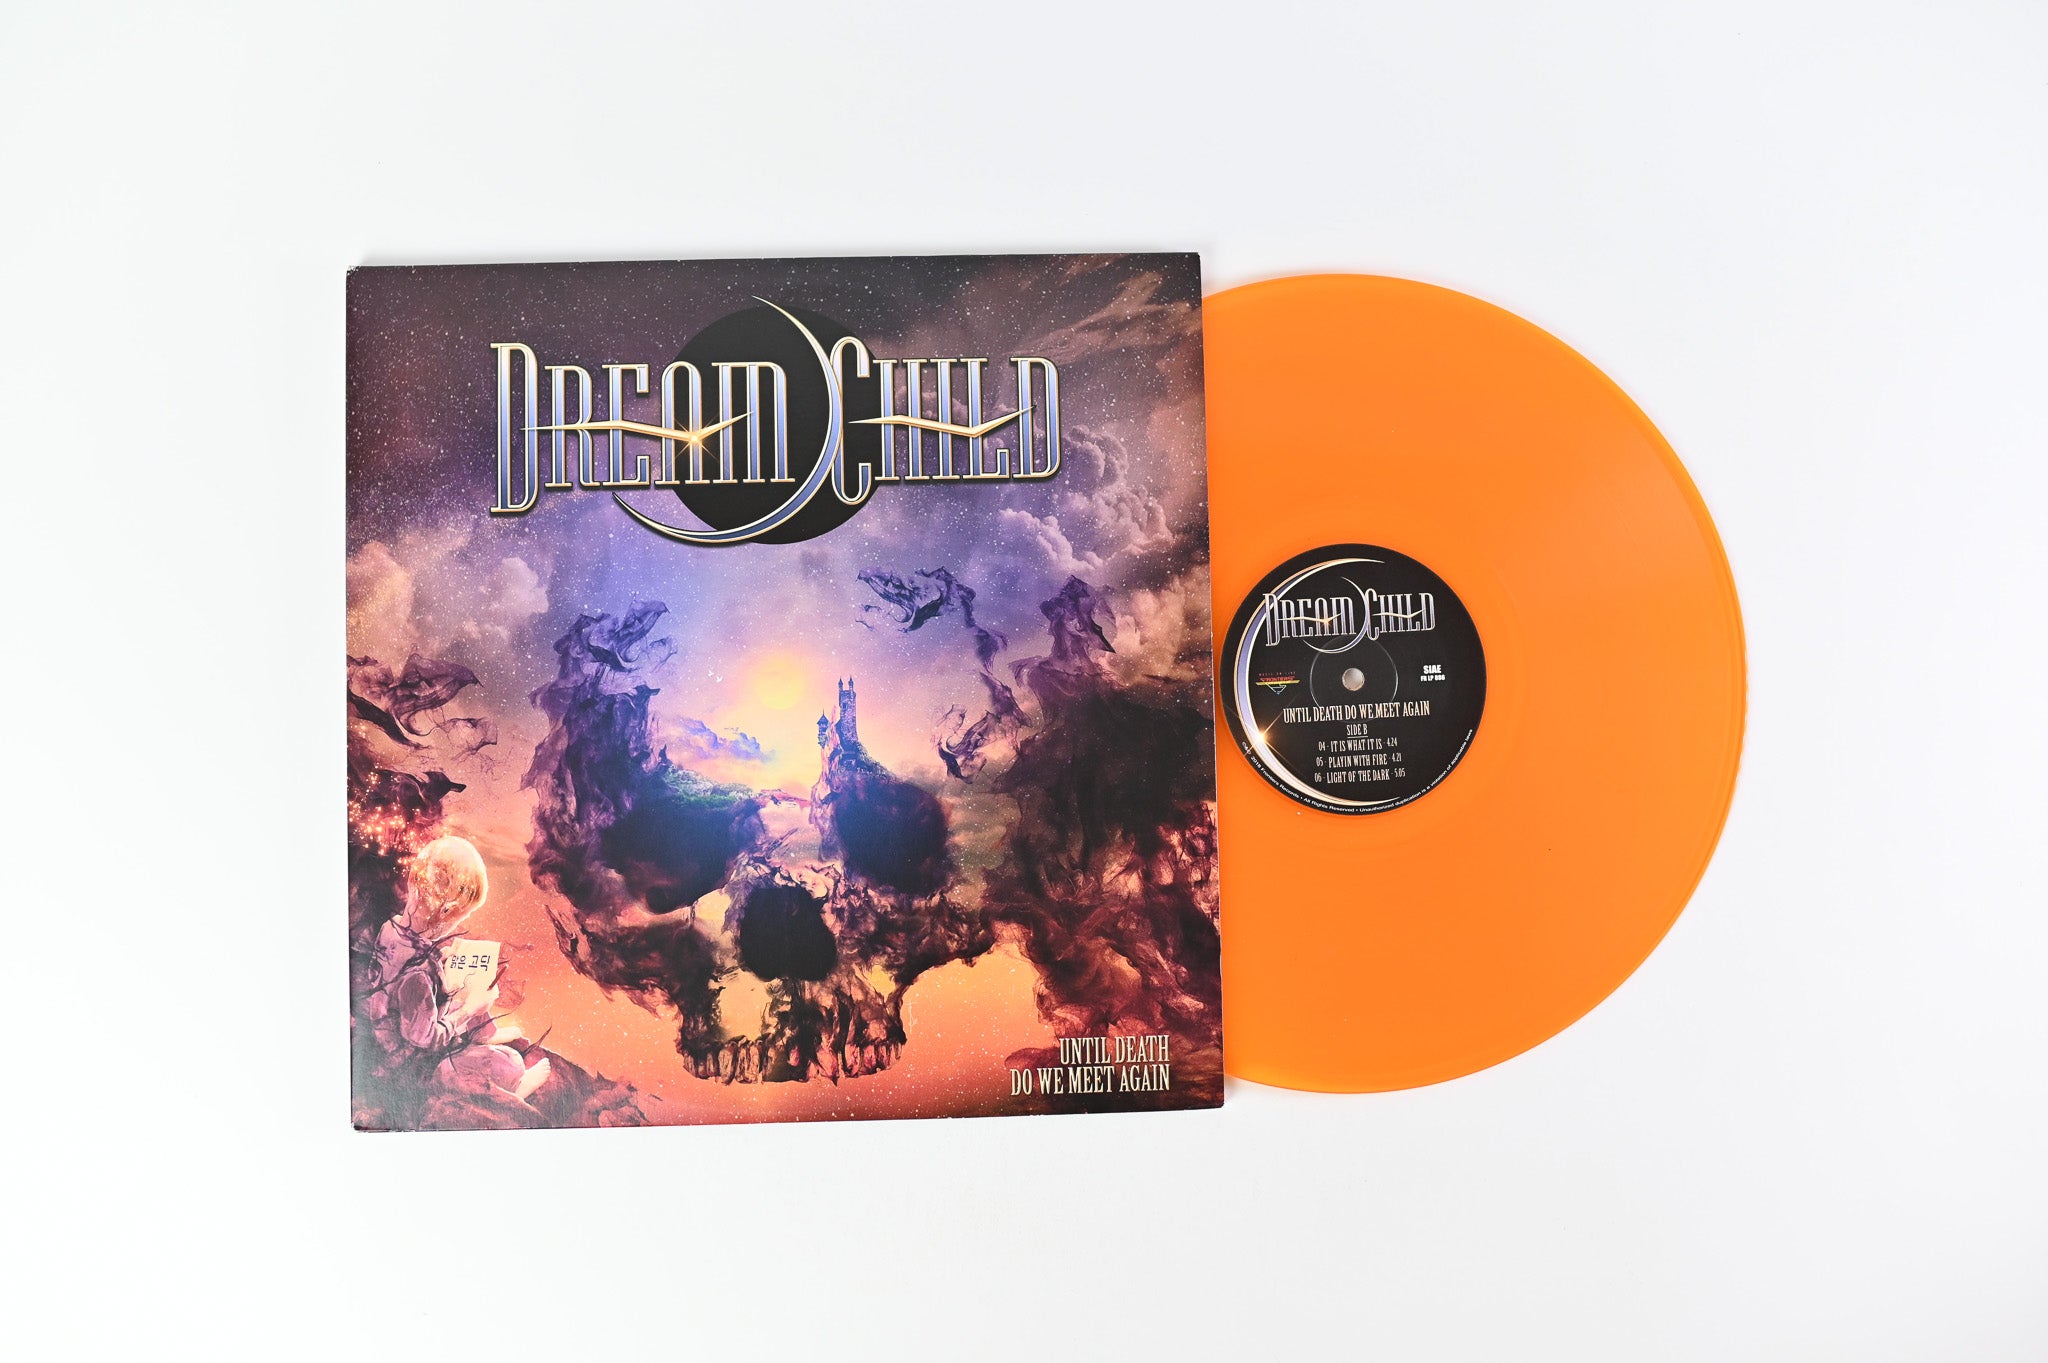 Dream Child - Until Death Do We Meet Again on Frontiers Ltd Orange Vinyl